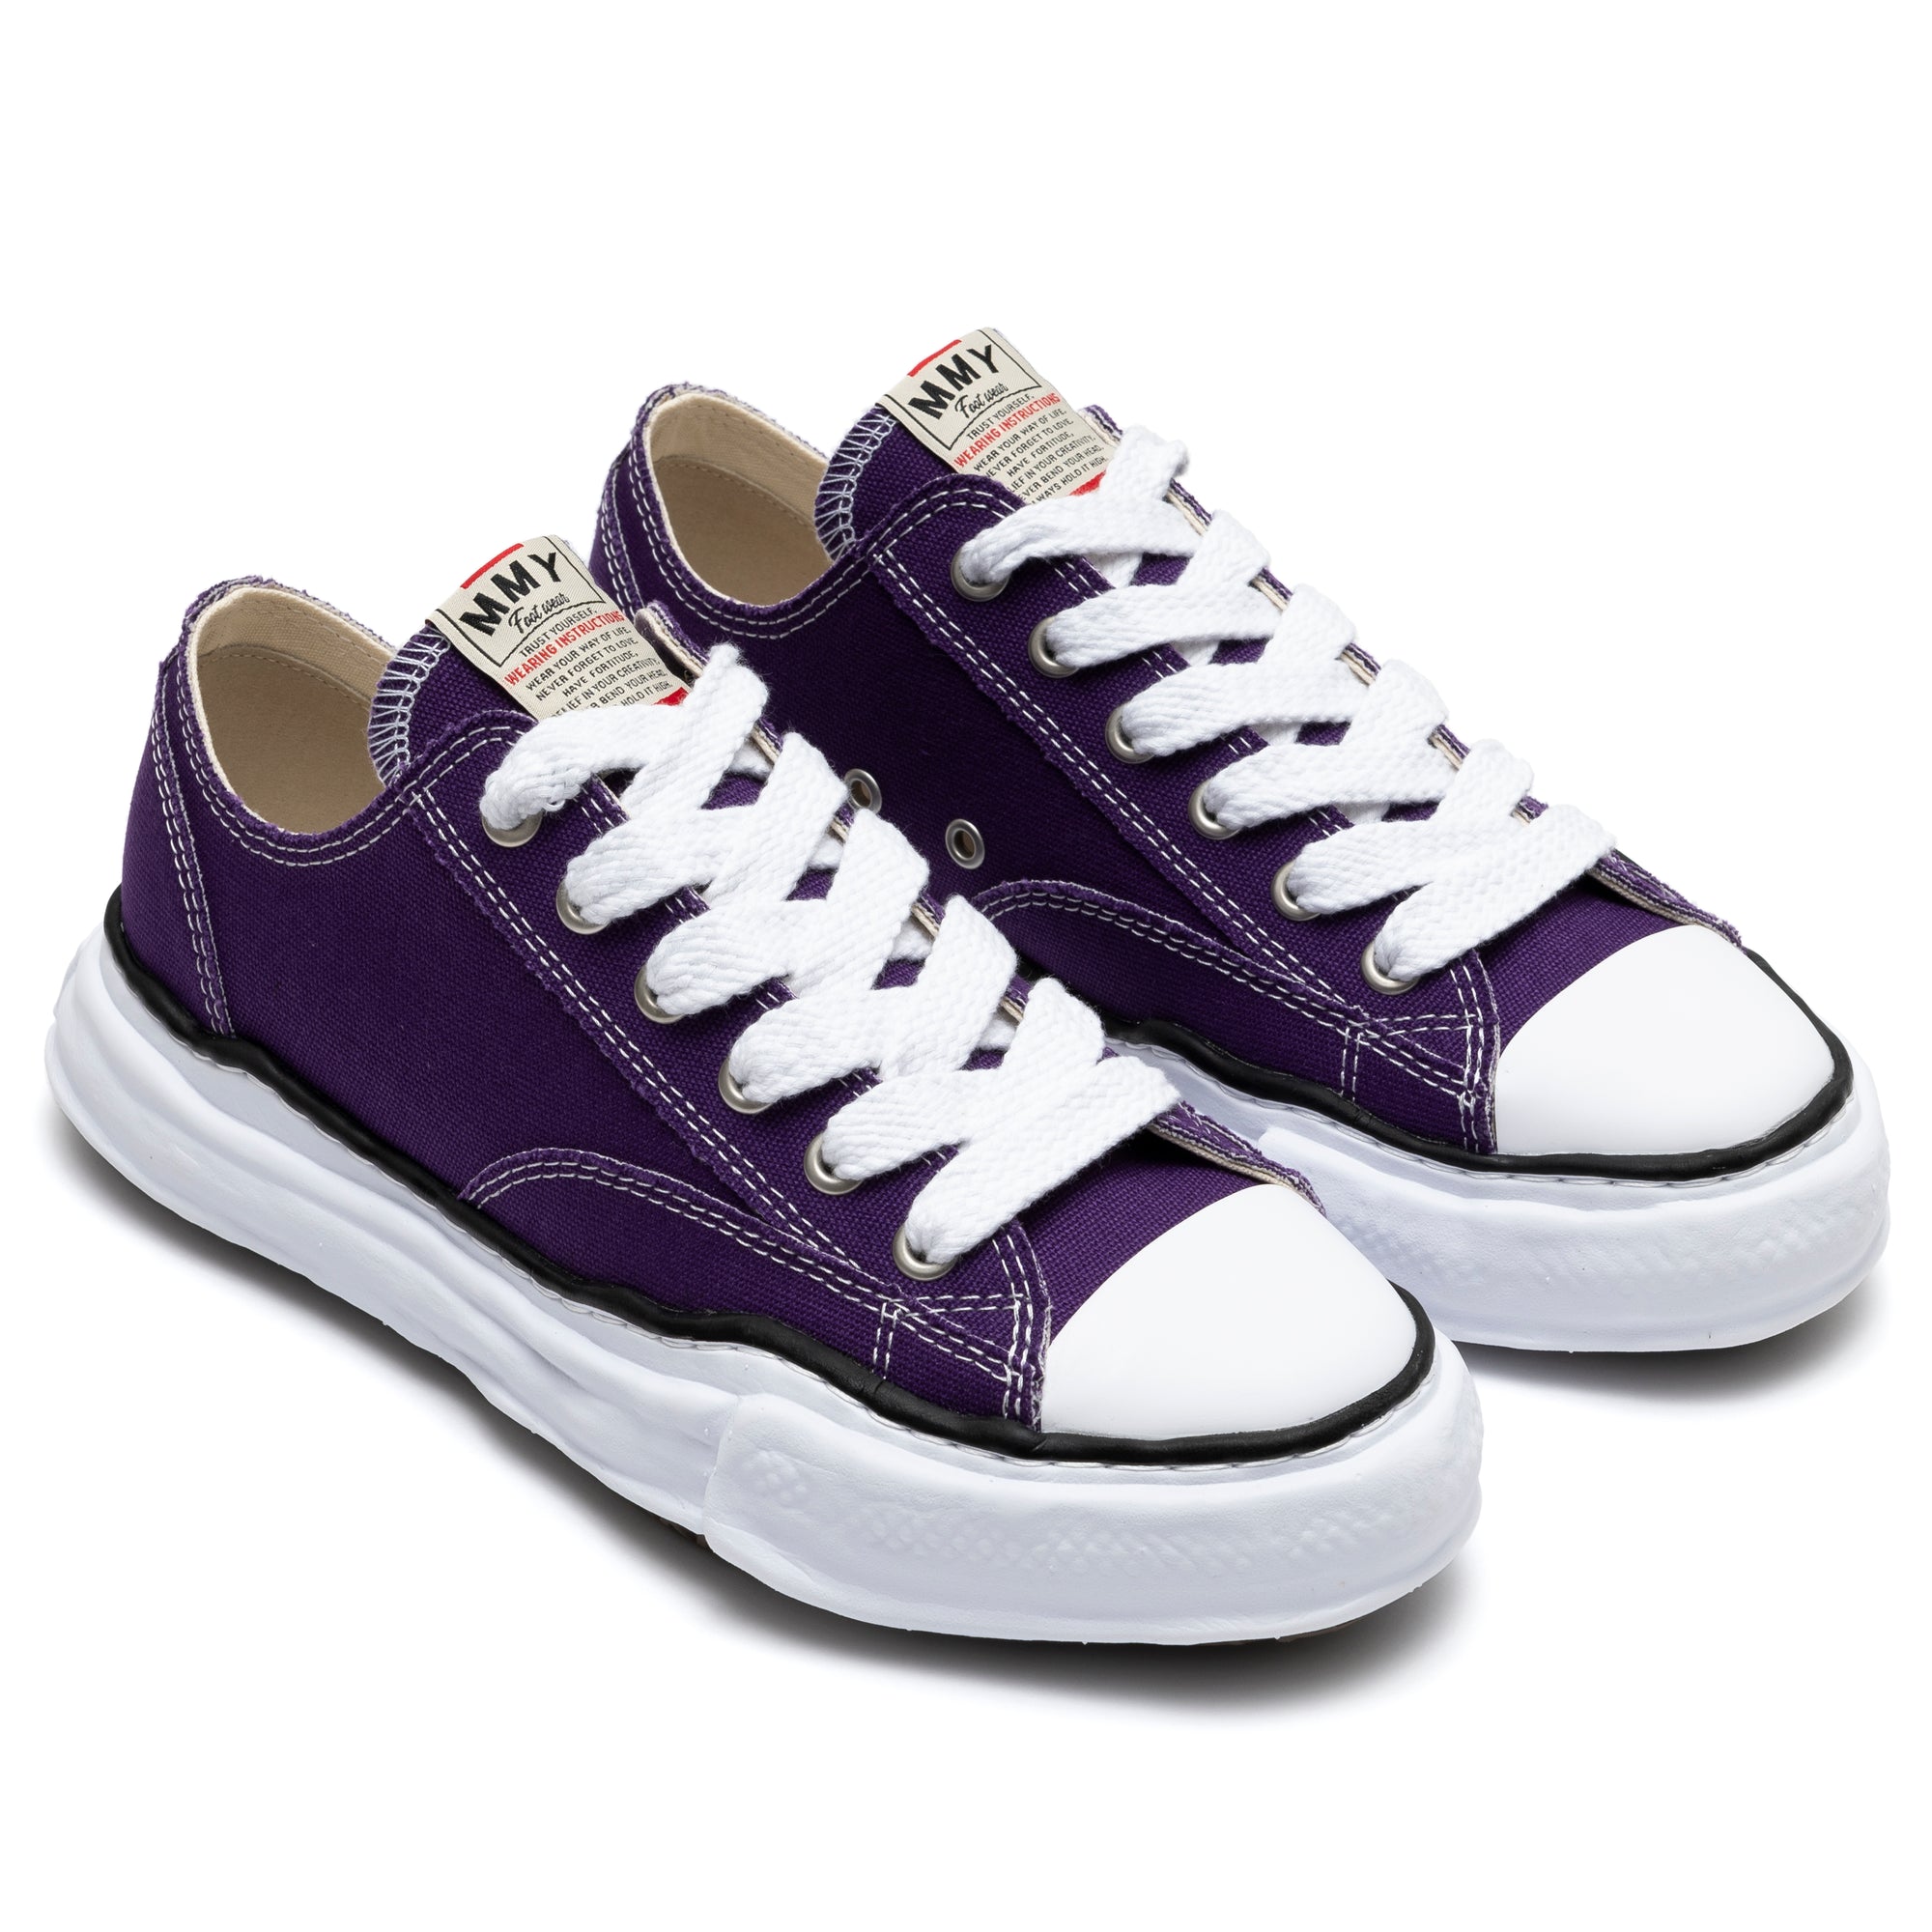 MAISON MIHARA YASUHIRO - Peterson Low/Canvas Sneaker - (Purple) view 2